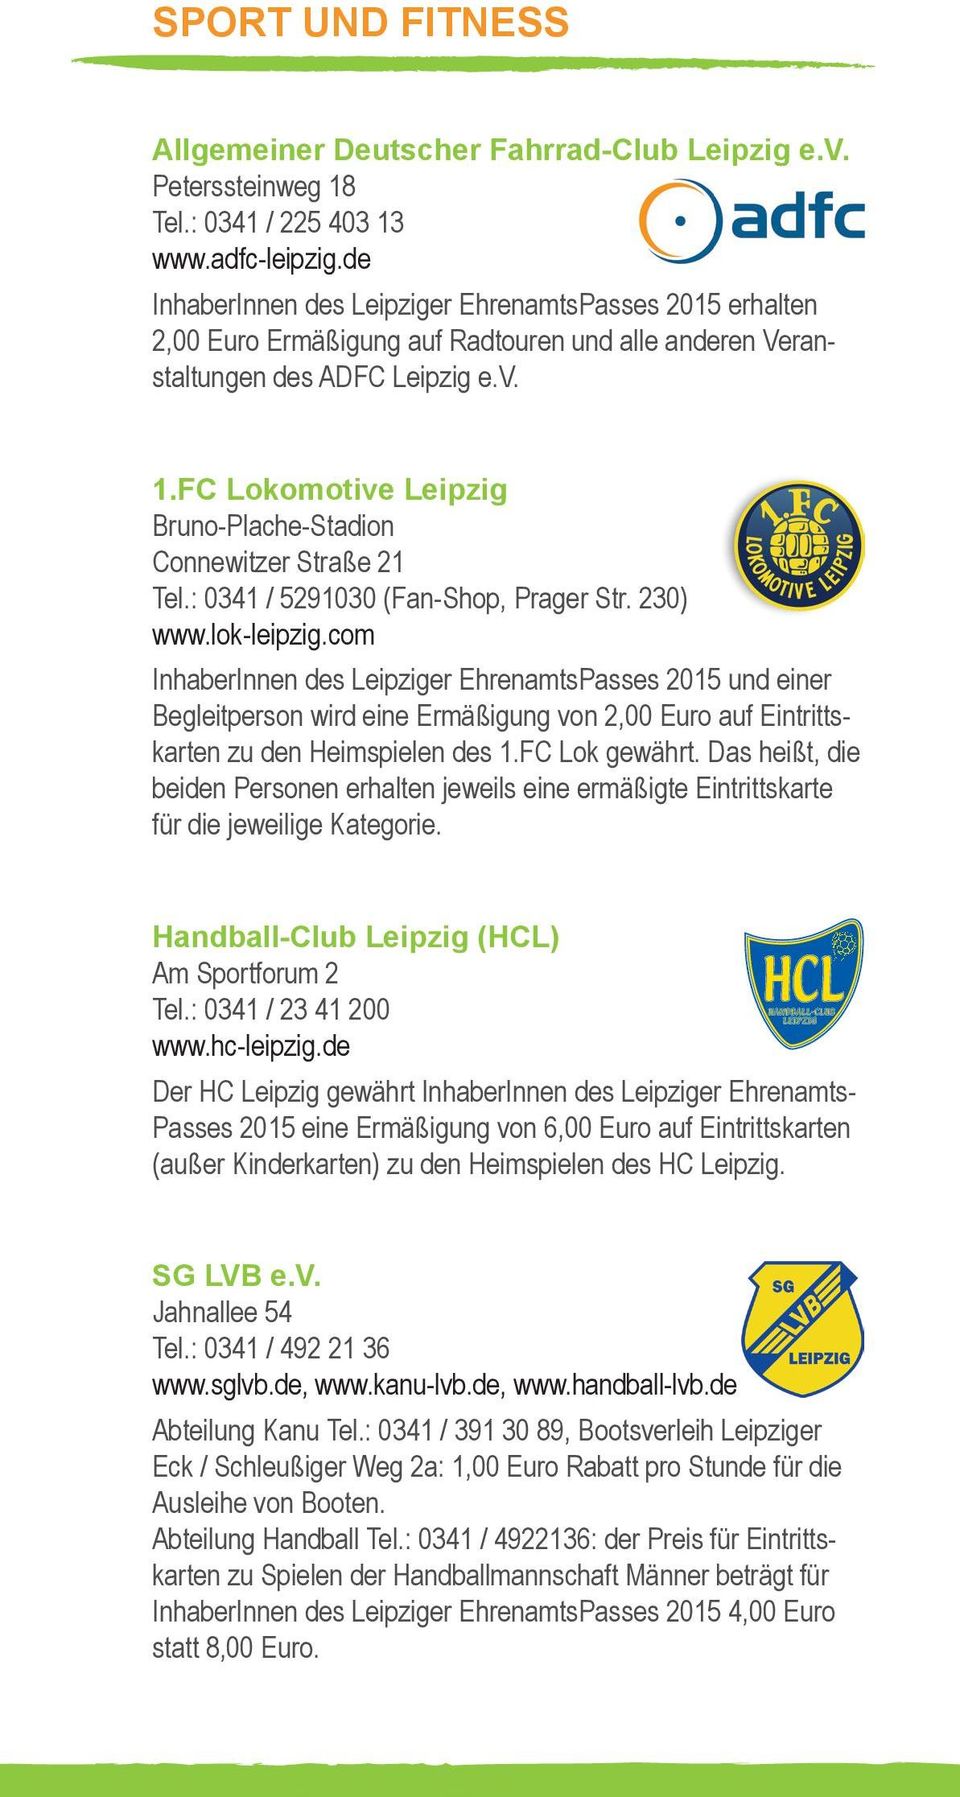 FC Lokomotive Leipzig Bruno-Plache-Stadion Connewitzer Straße 21 Tel.: 0341 / 5291030 (Fan-Shop, Prager Str. 230) www.lok-leipzig.